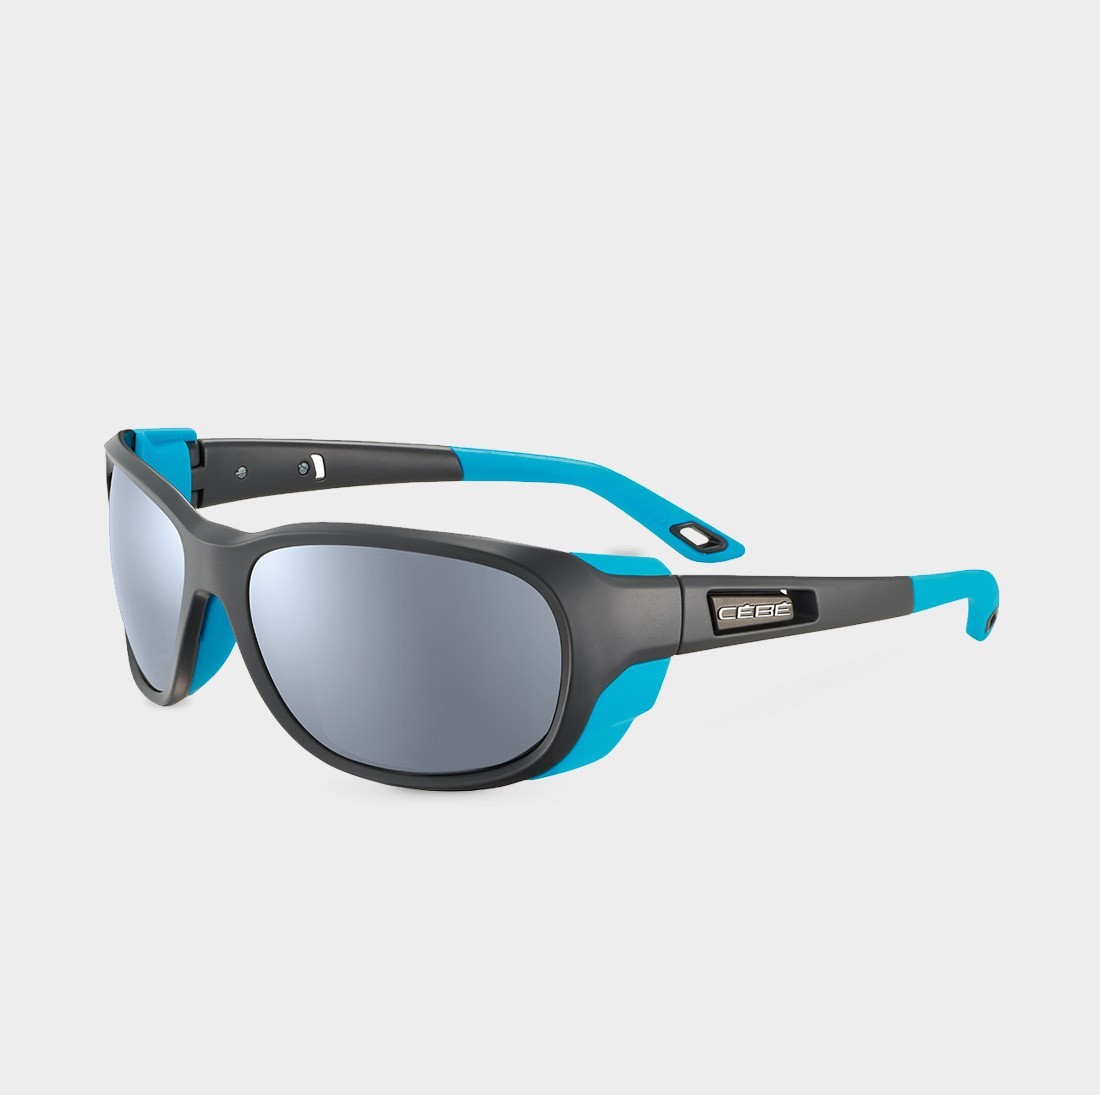 cebe-everest-sport-glasses-medium-grey-blue